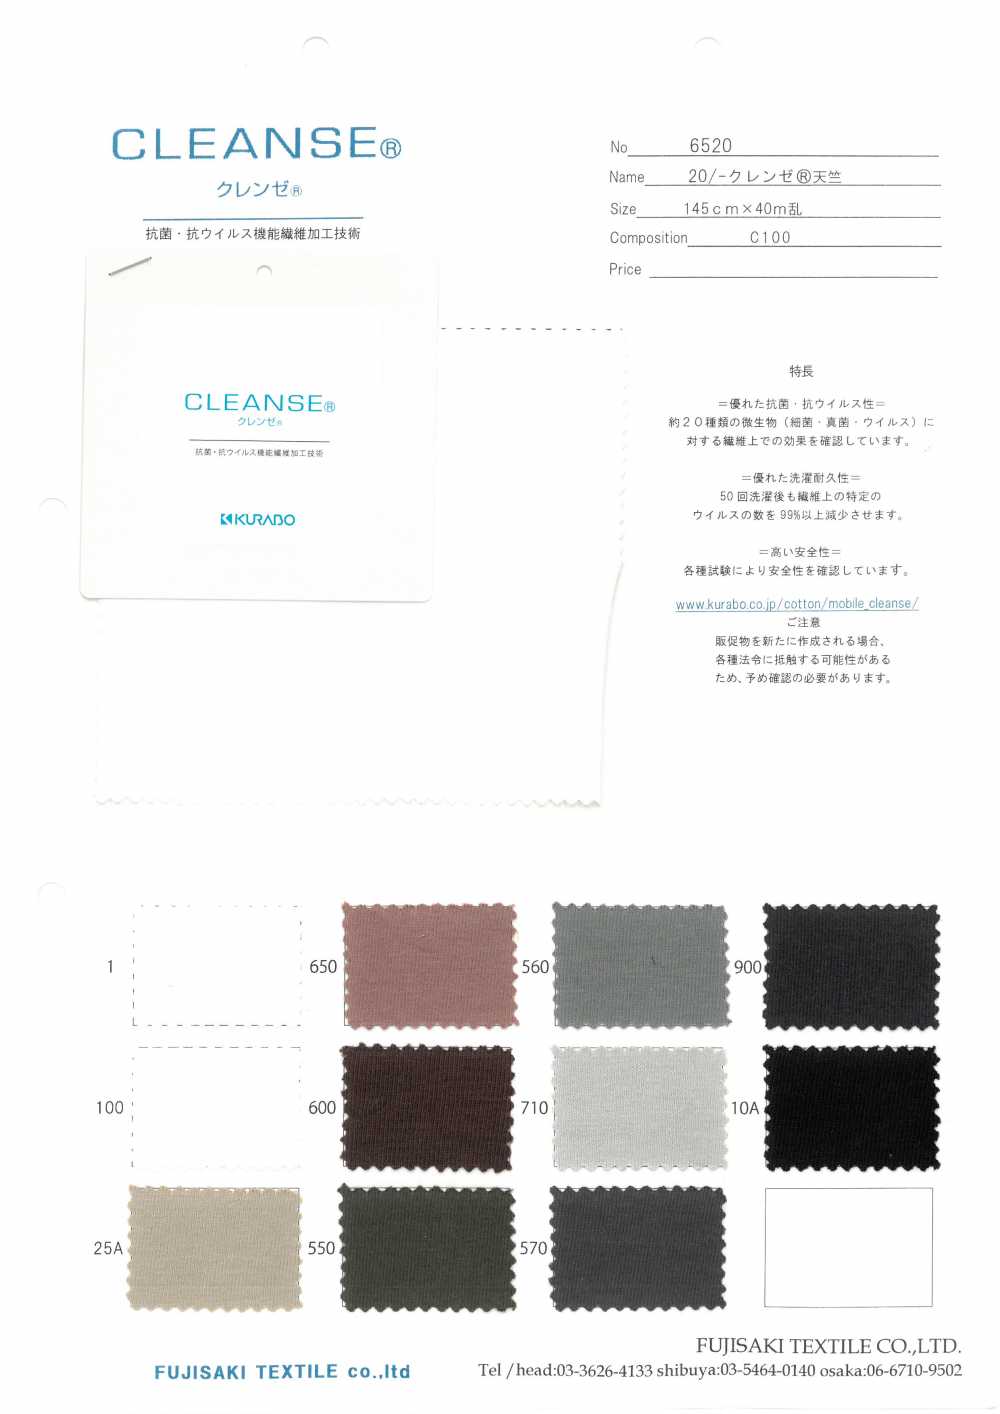 6520 20 / CLEANSE Tianzhu Cotton[Textile / Fabric] Fujisaki Textile